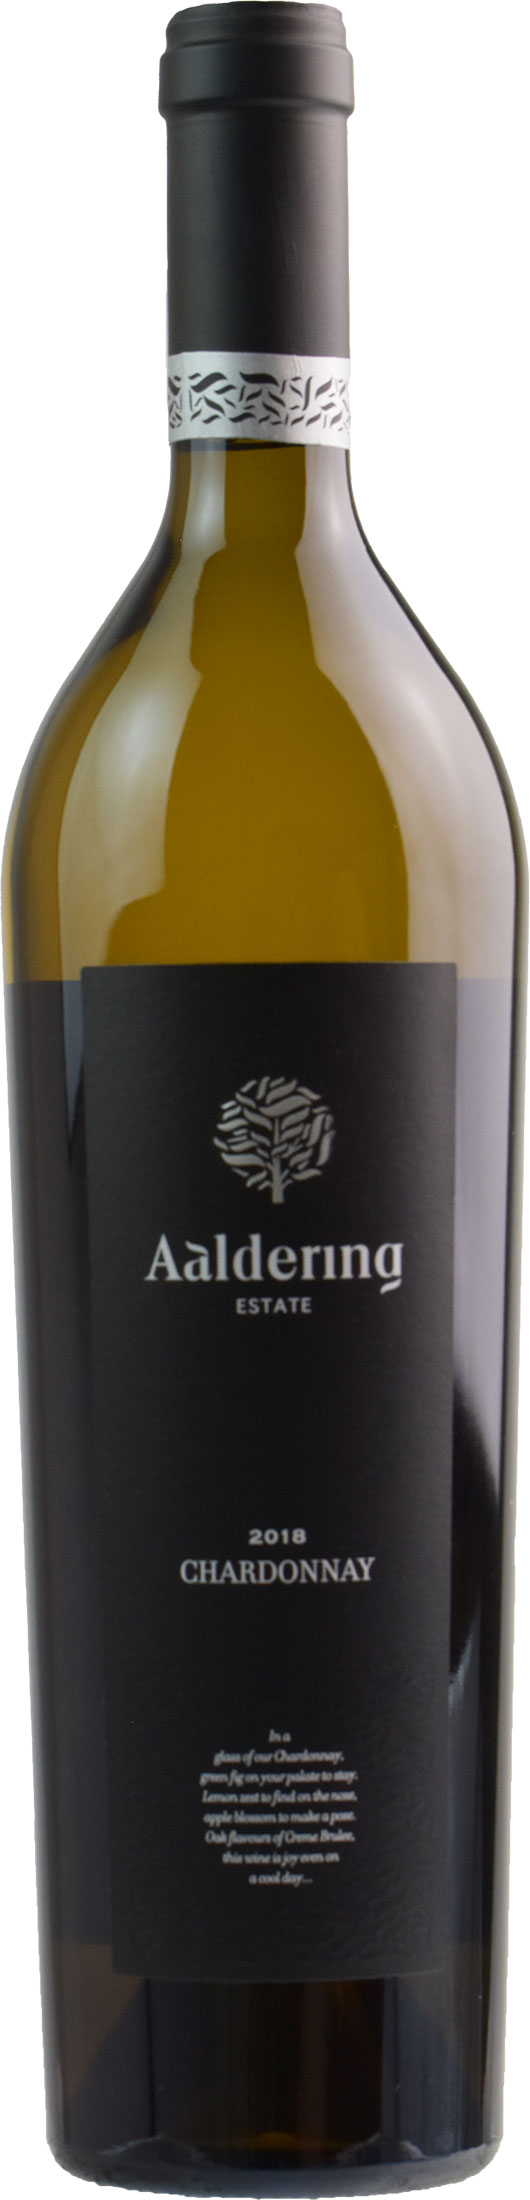 Aaldering Vineyards Chardonnay